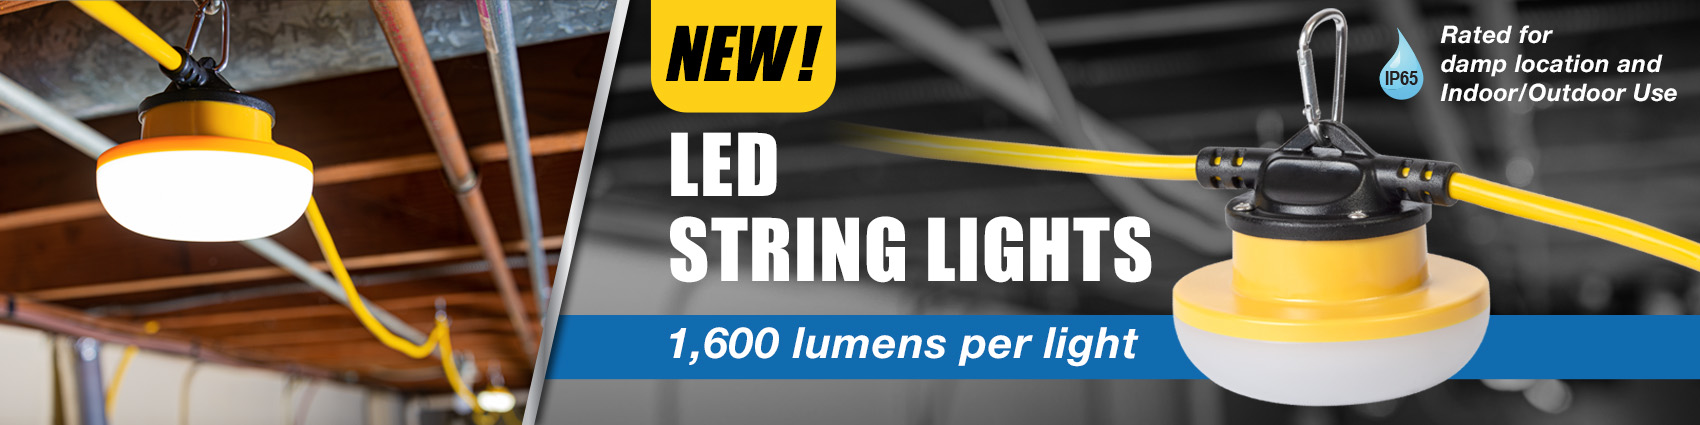 LED String Lights, 1600 Lumens per light